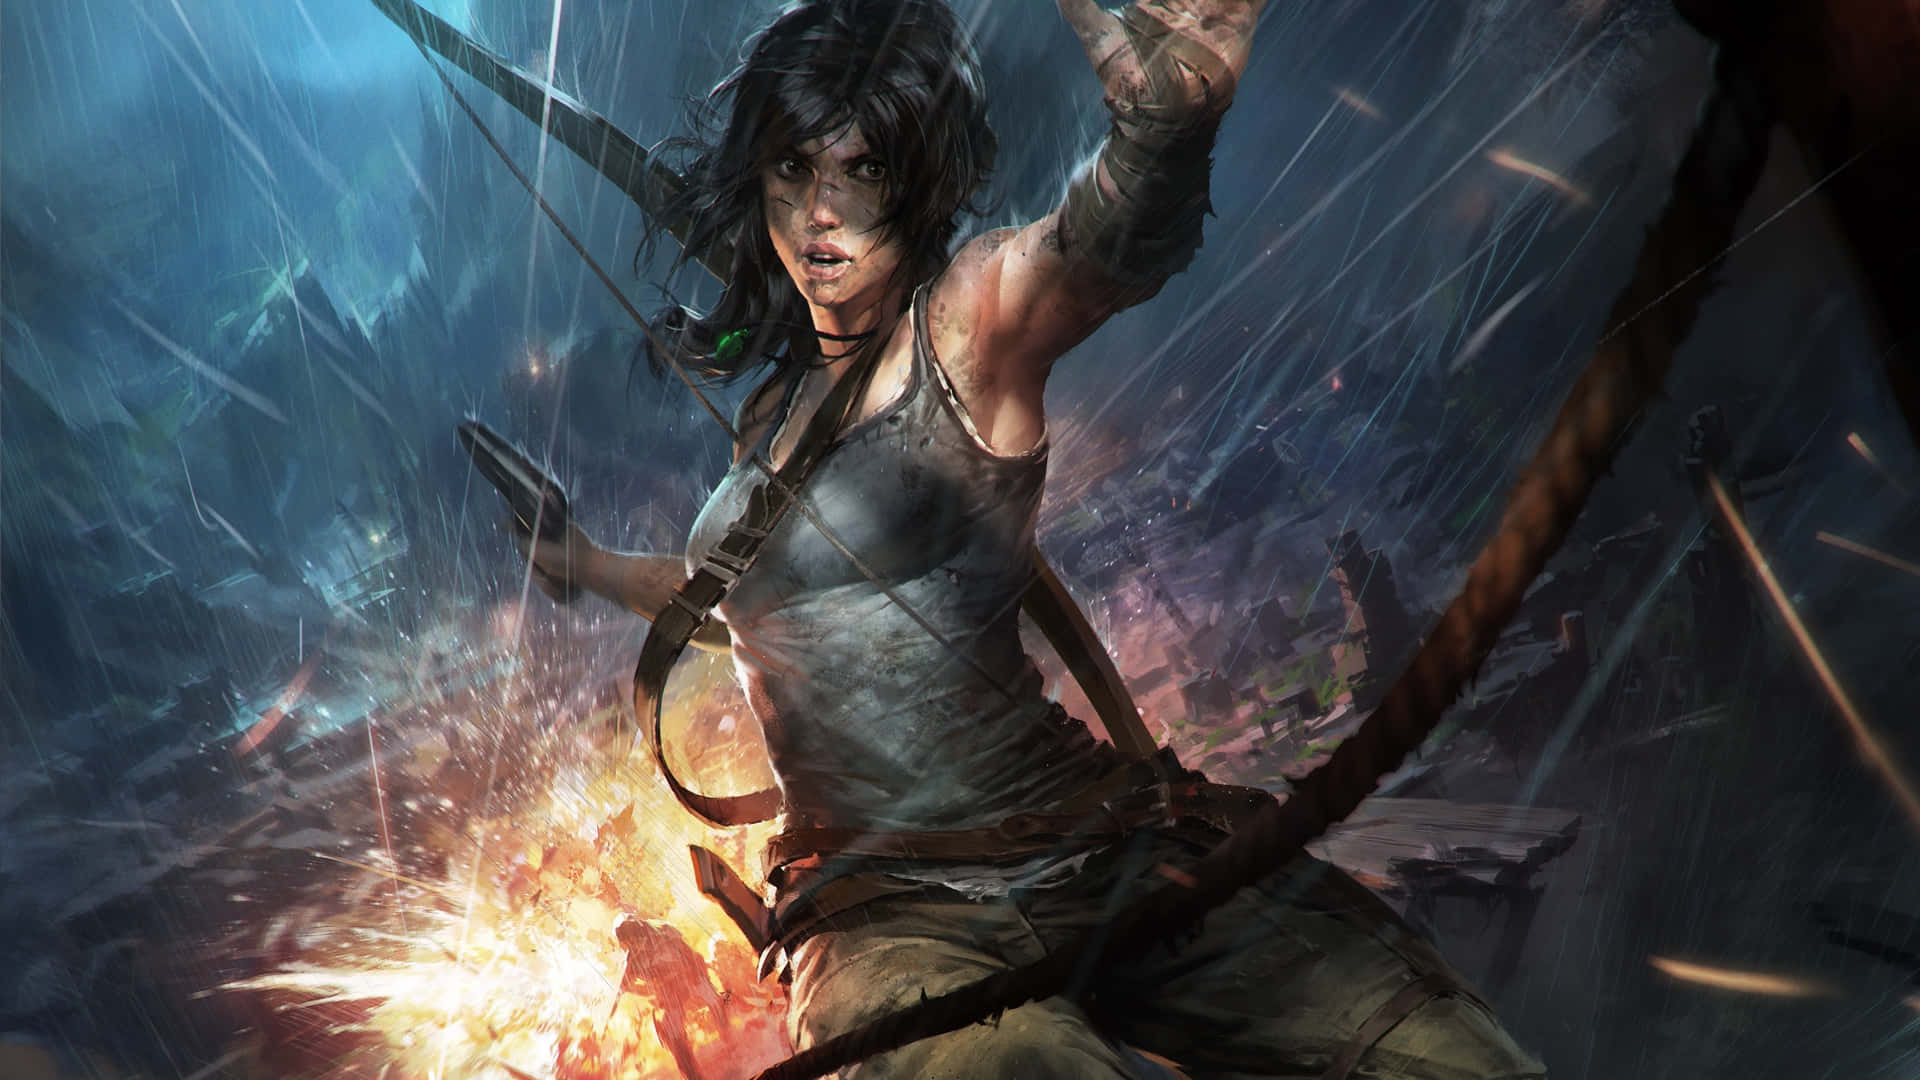 Tomb Raider er i luften med en bue og pil. Wallpaper